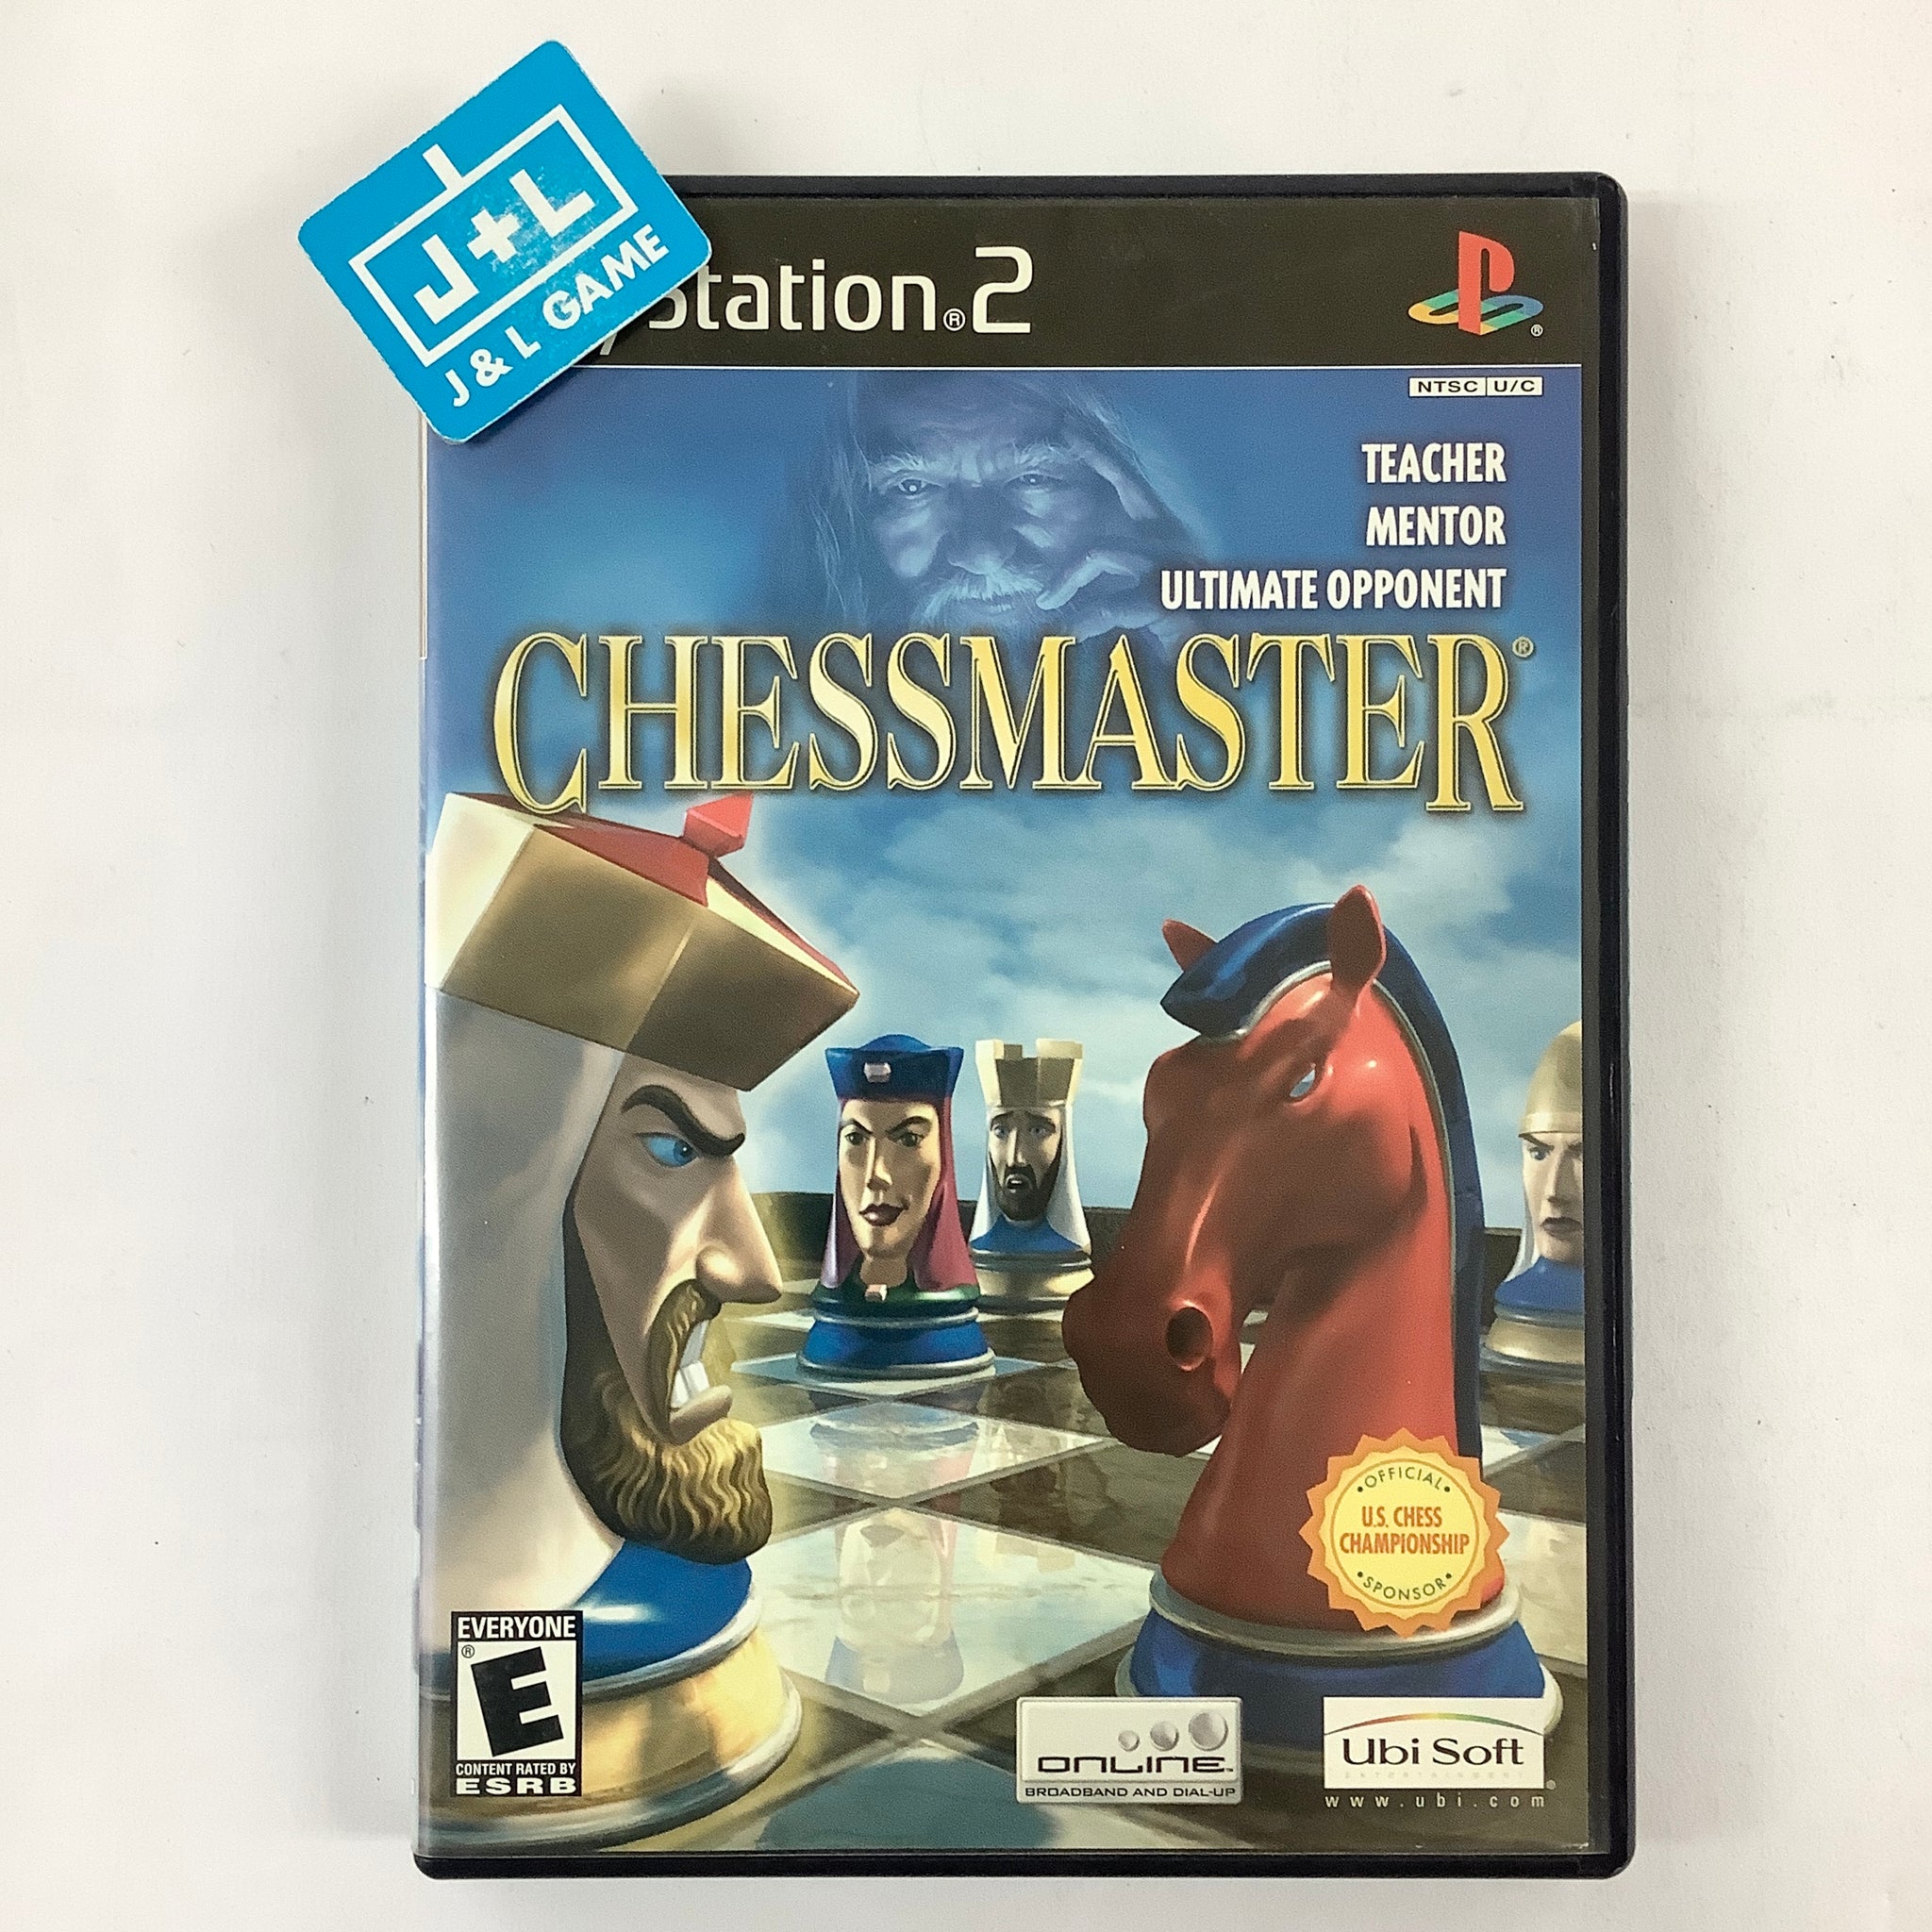 Chessmaster - Xbox Game